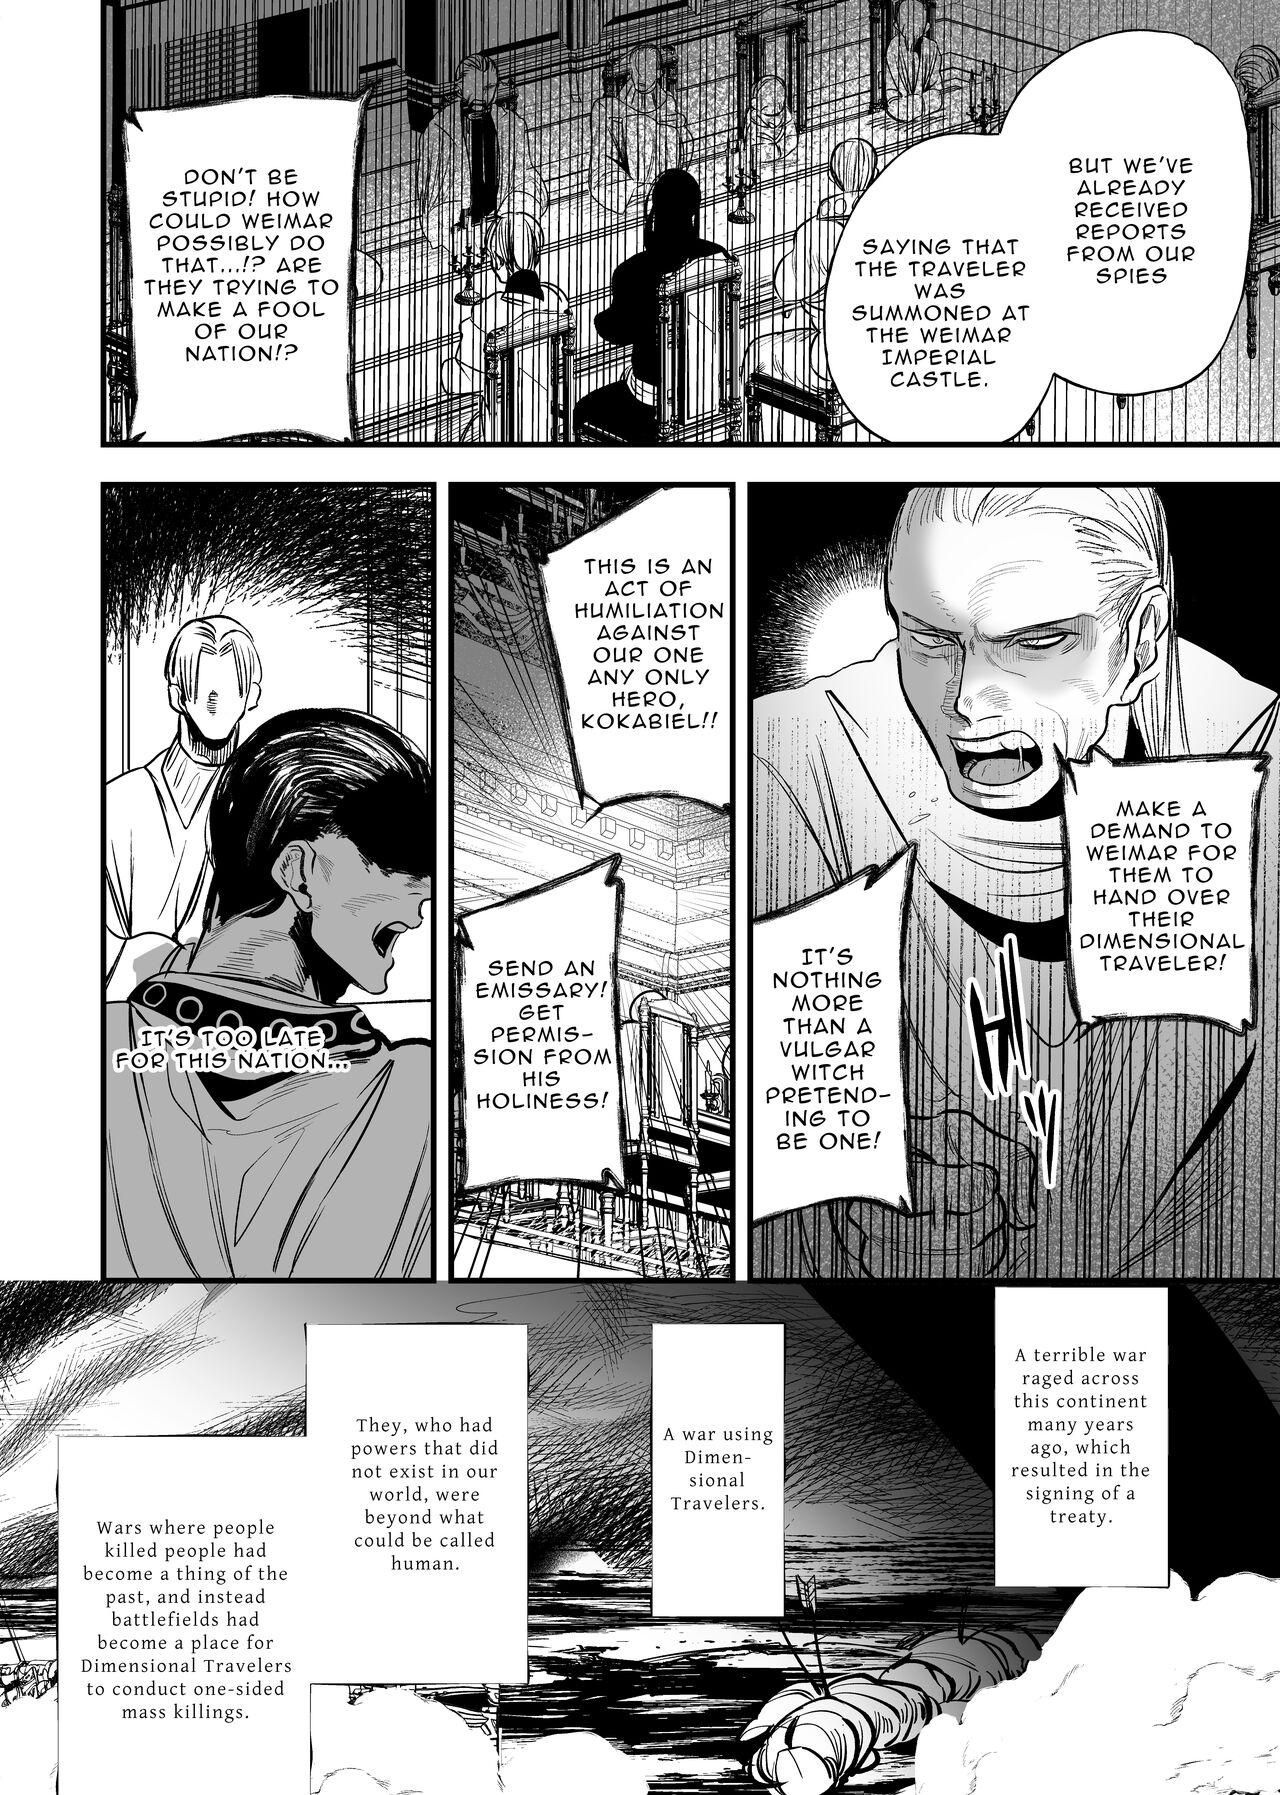 Macho The Man Who Saved Me on my Isekai Trip was a Killer... 2 - Original Brazil - Page 6